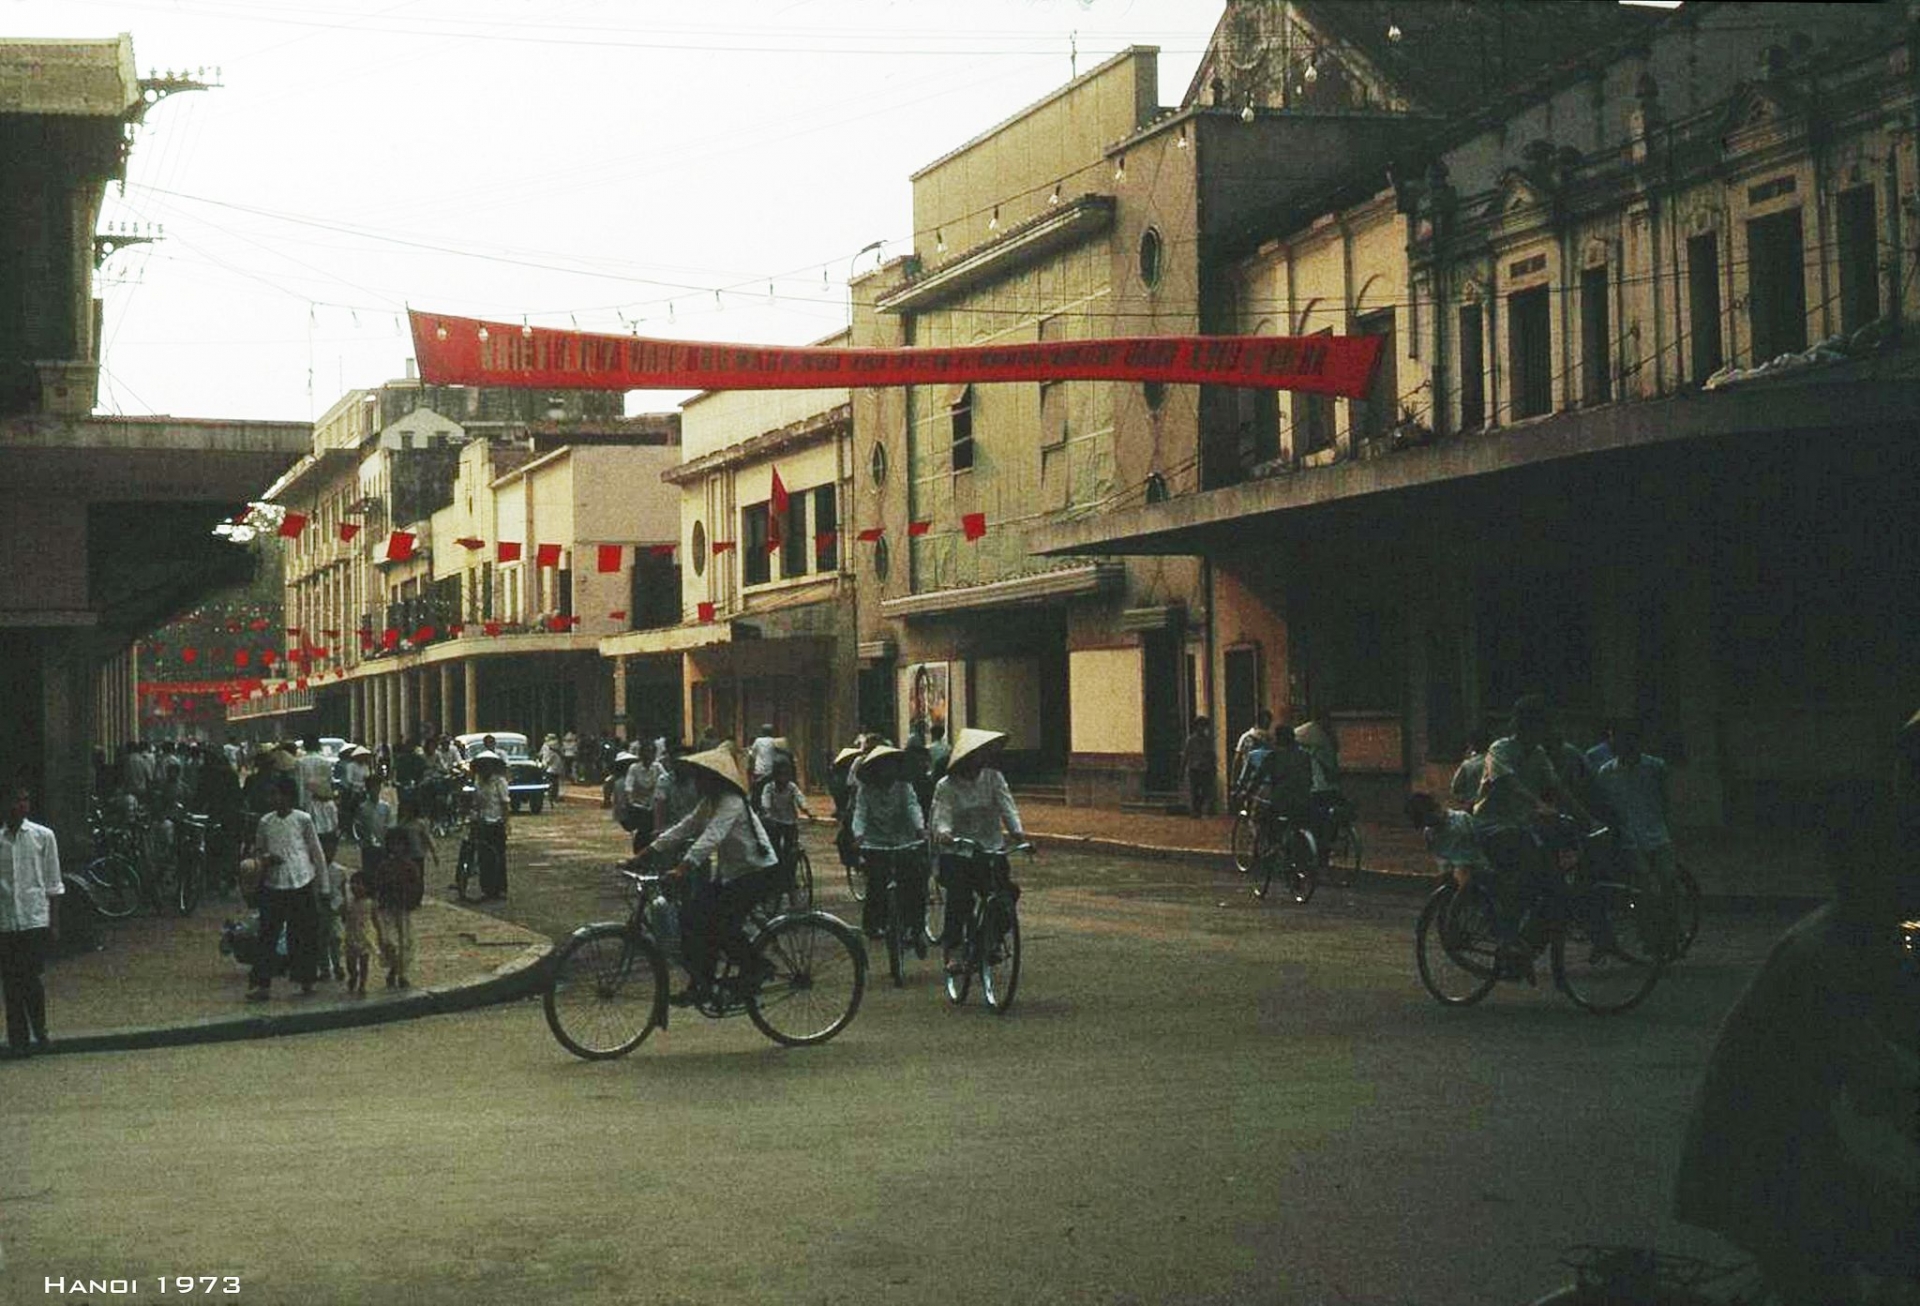 In photos: Vivid memmories of Hanoi in 1973